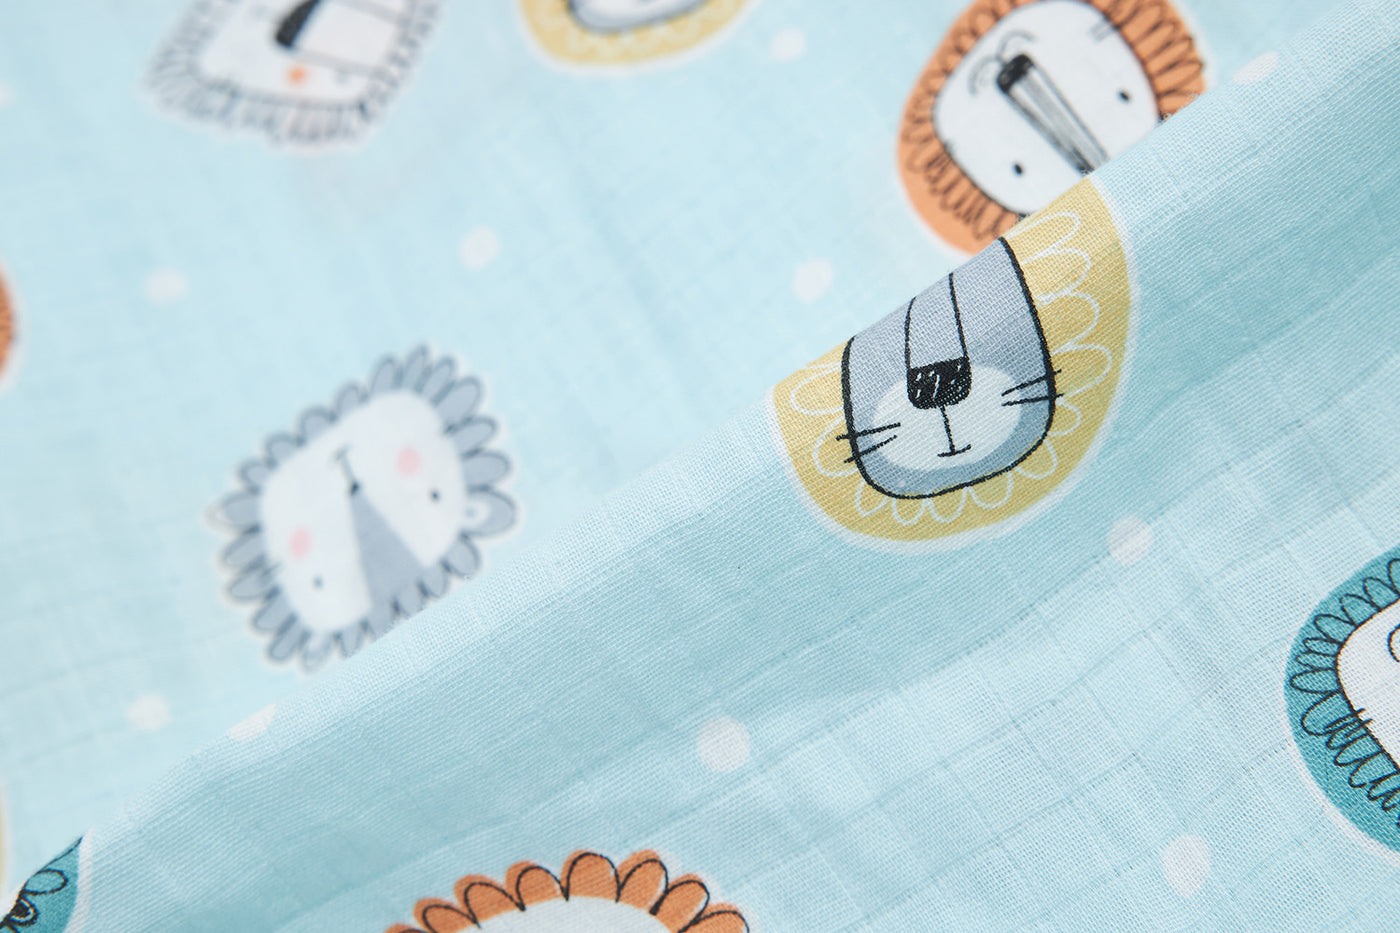 Baby Wearable Muslin Blanket Long Sleeve Sleeping Bag 3-Way Zipper Blue - Little Kooma